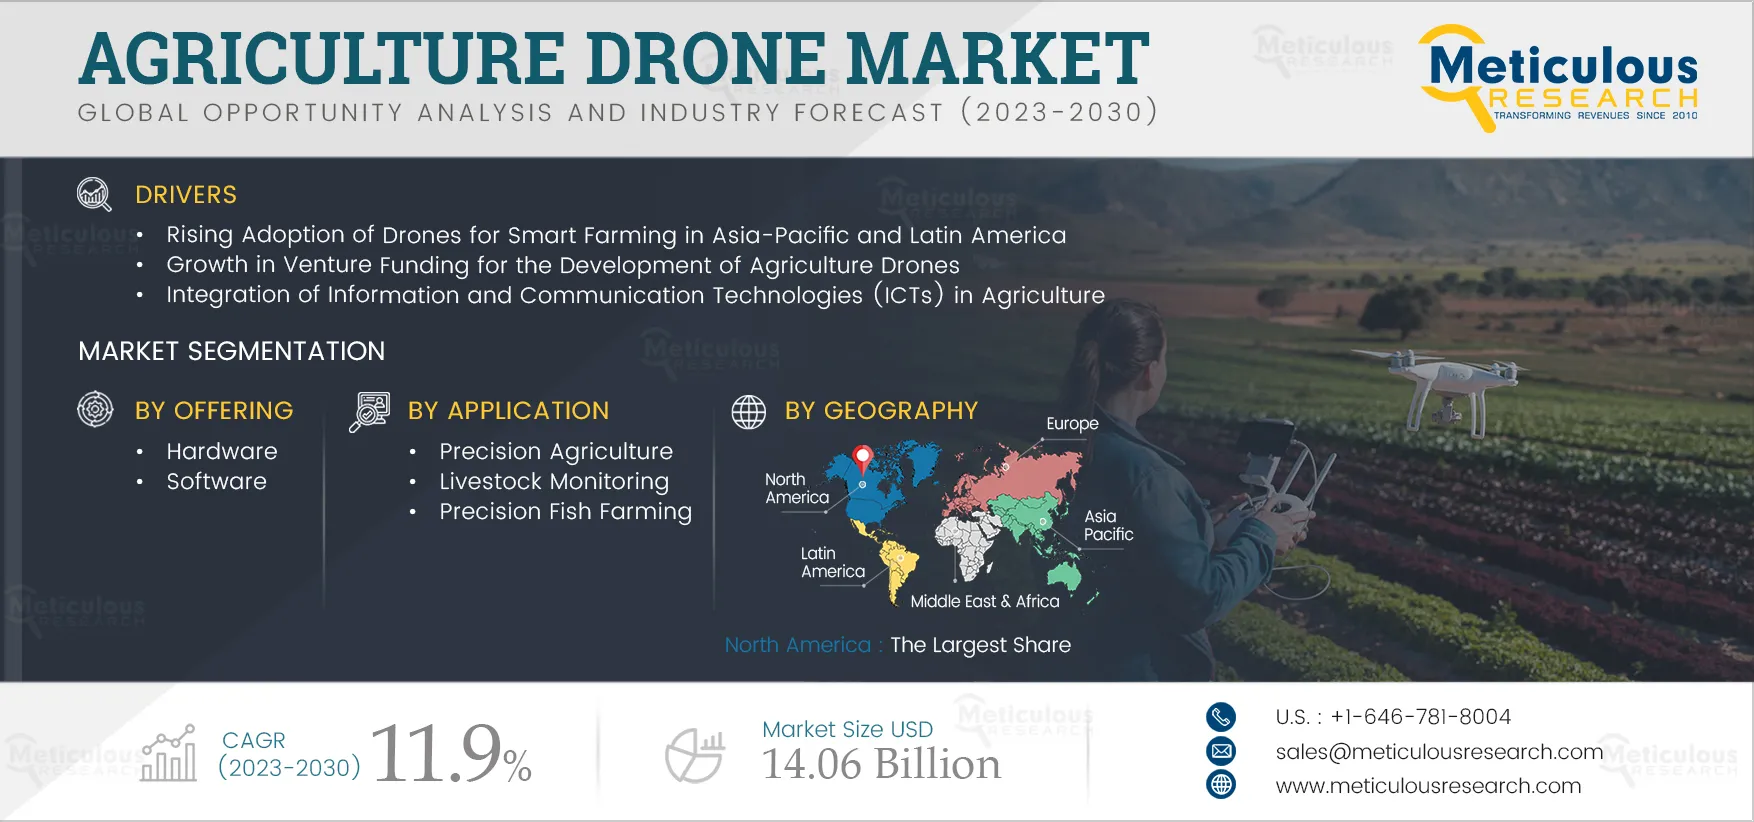 Agriculture Drones Market